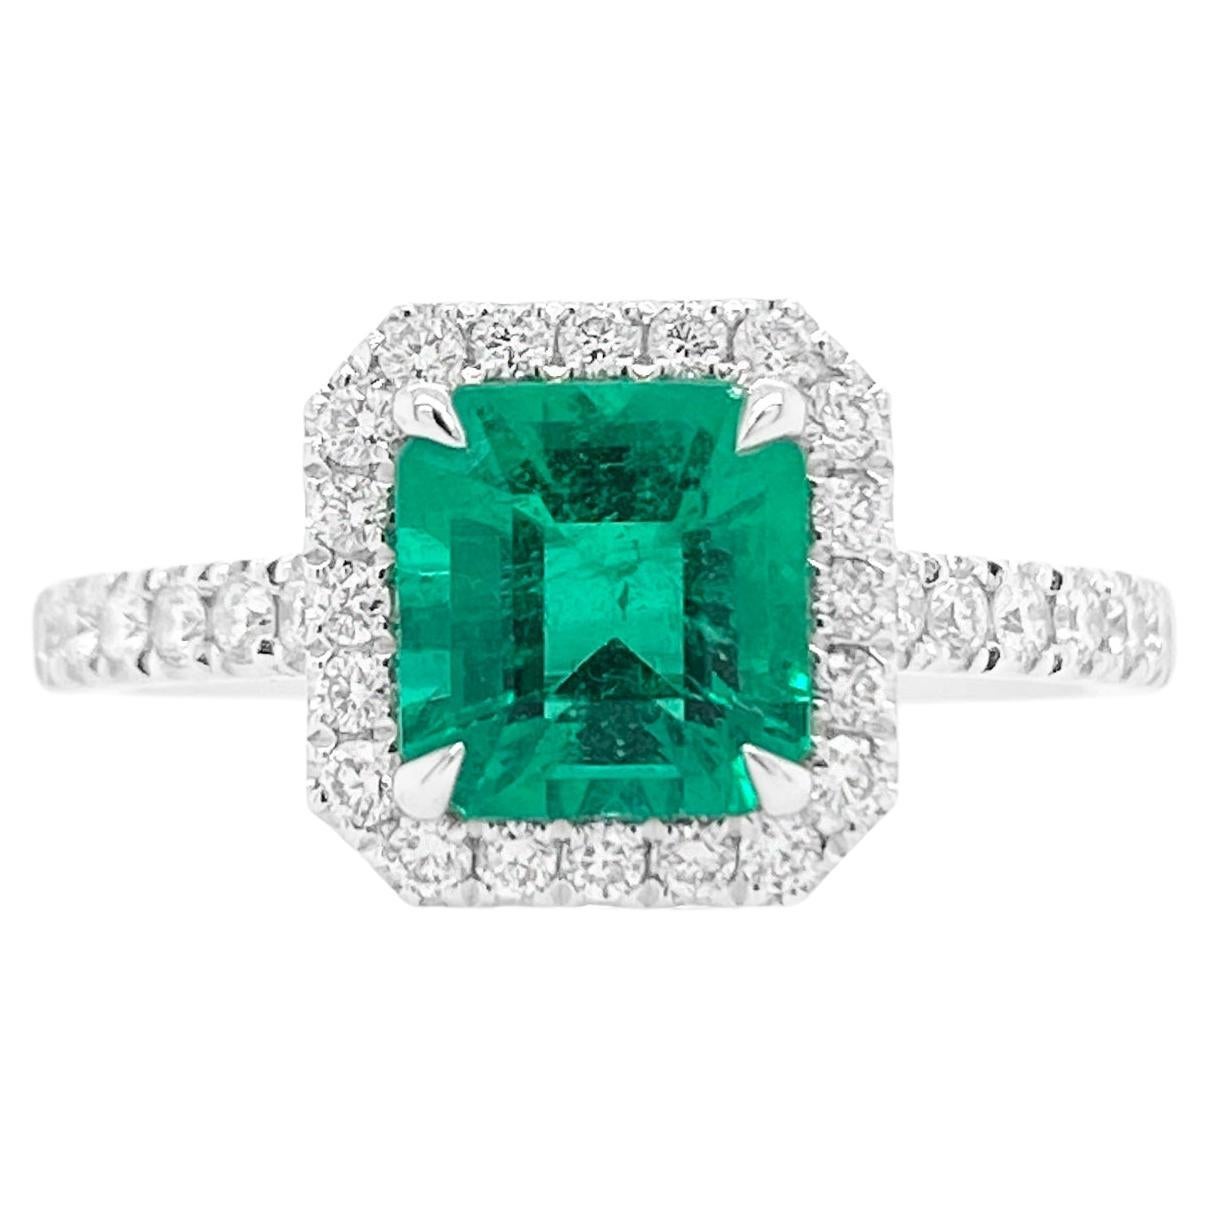 Vivid Green Colombian Emerald Ring set in White diamonds